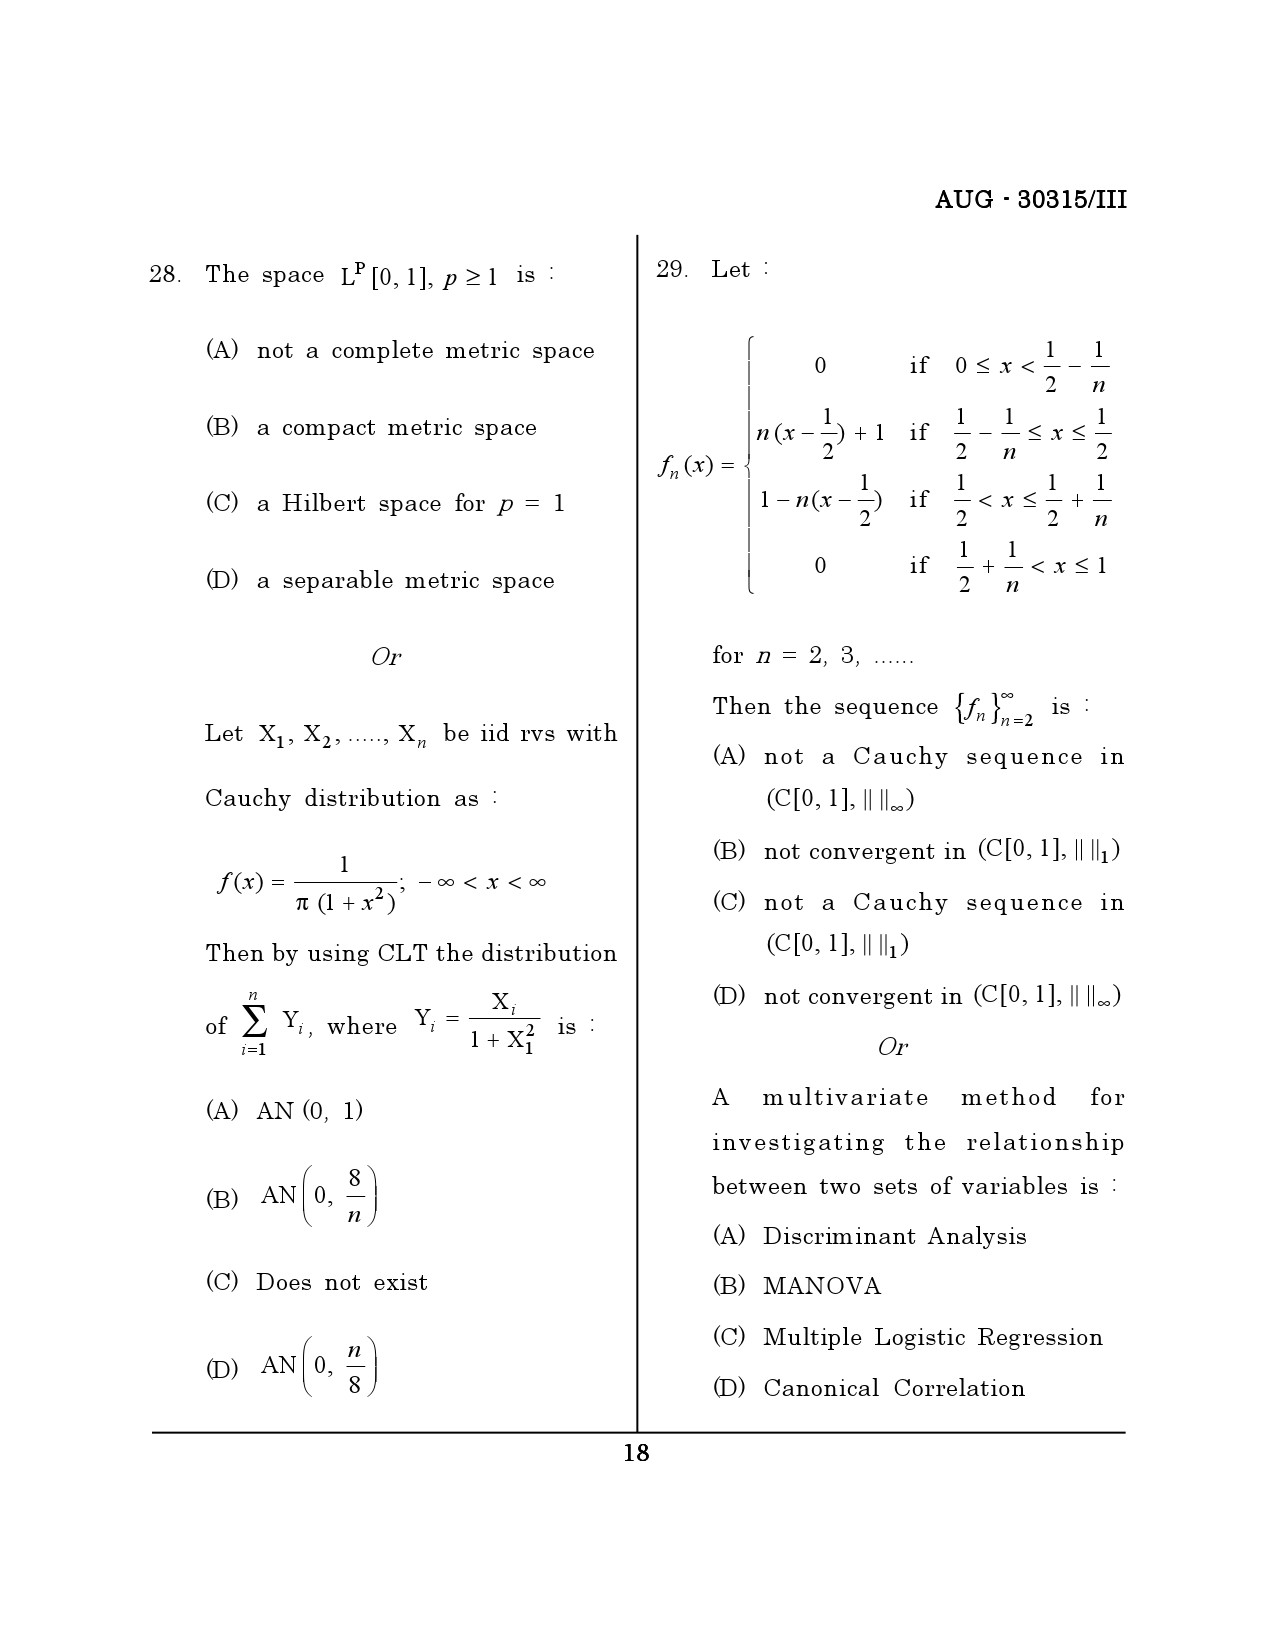 Maharashtra SET Mathematical Sciences Question Paper III August 2015 17